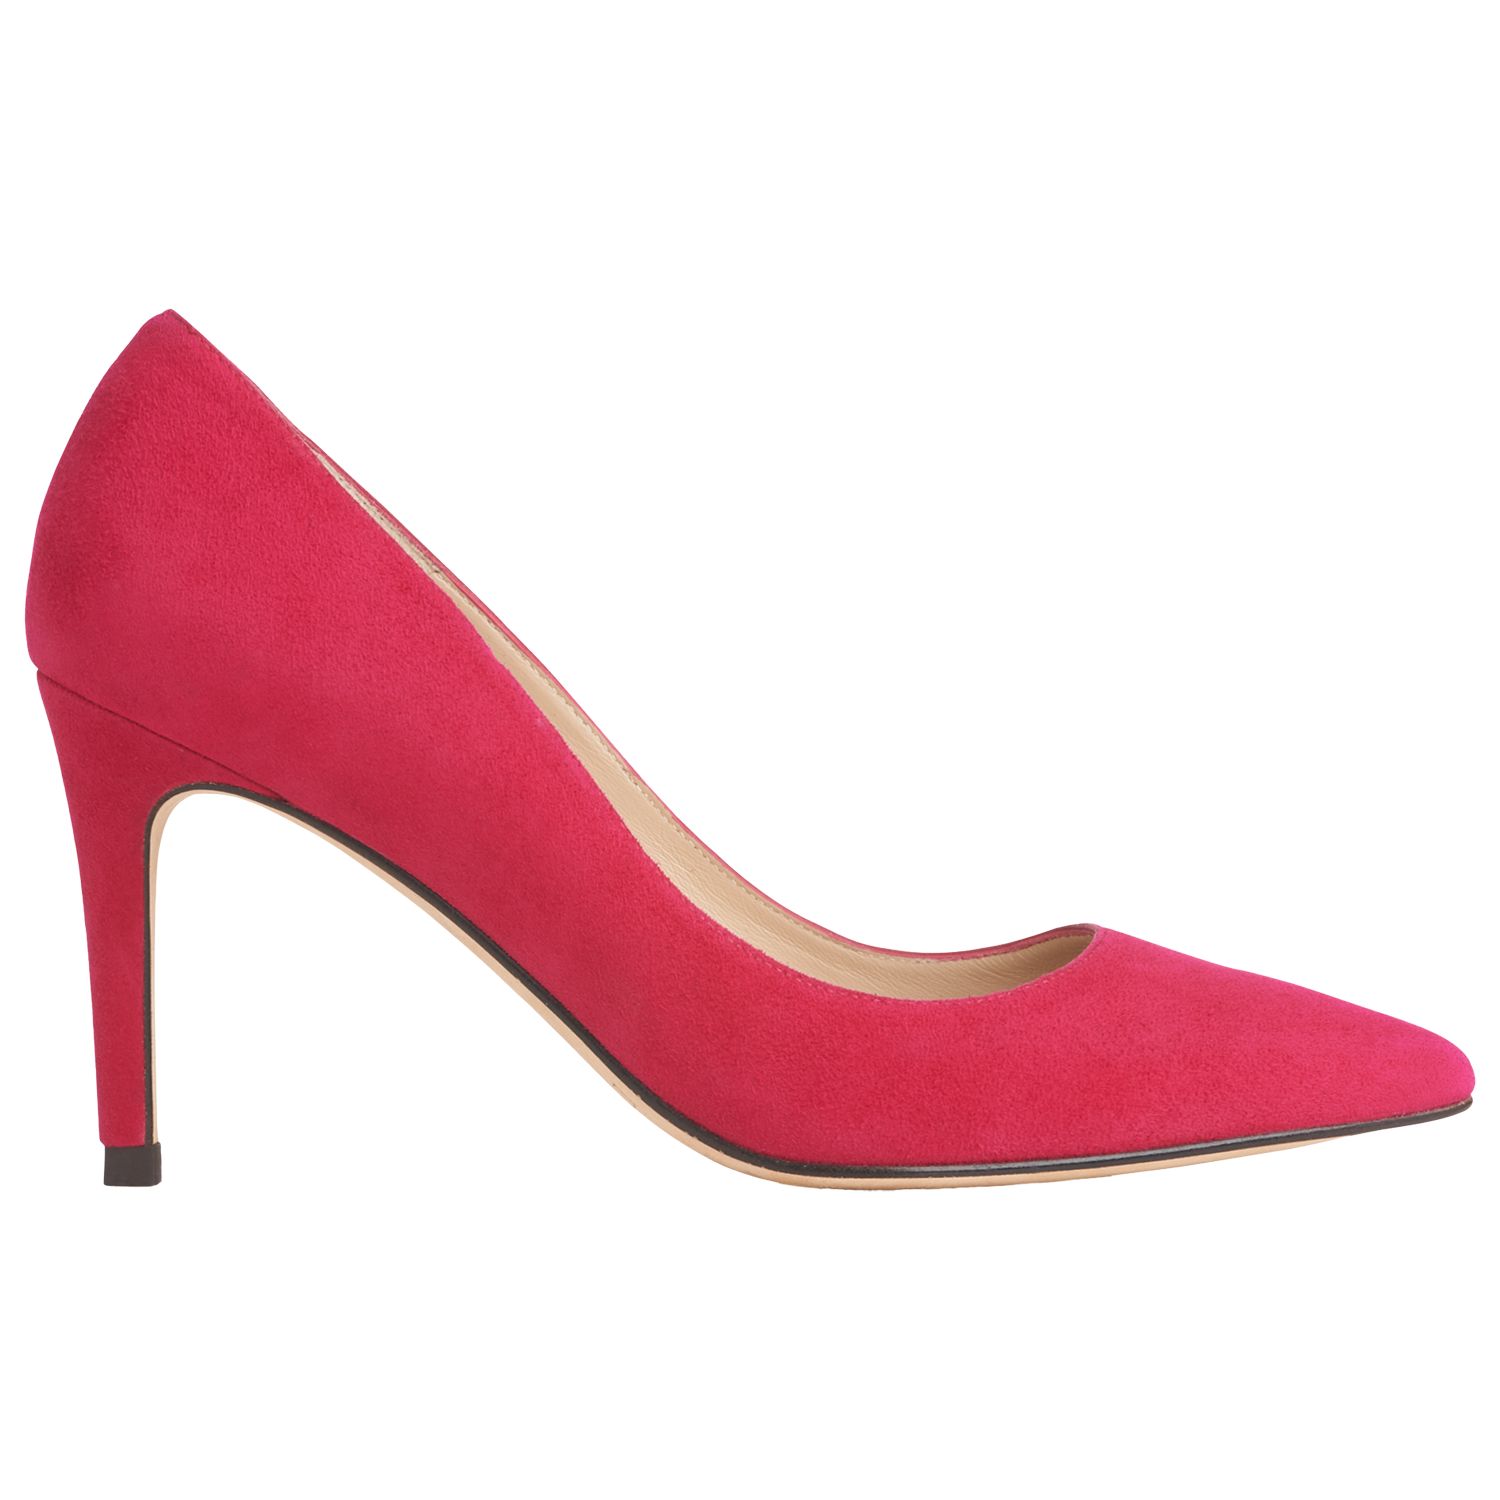 L.K.Bennett Florete Pointed Toe Court Shoes, Pink at John Lewis & Partners